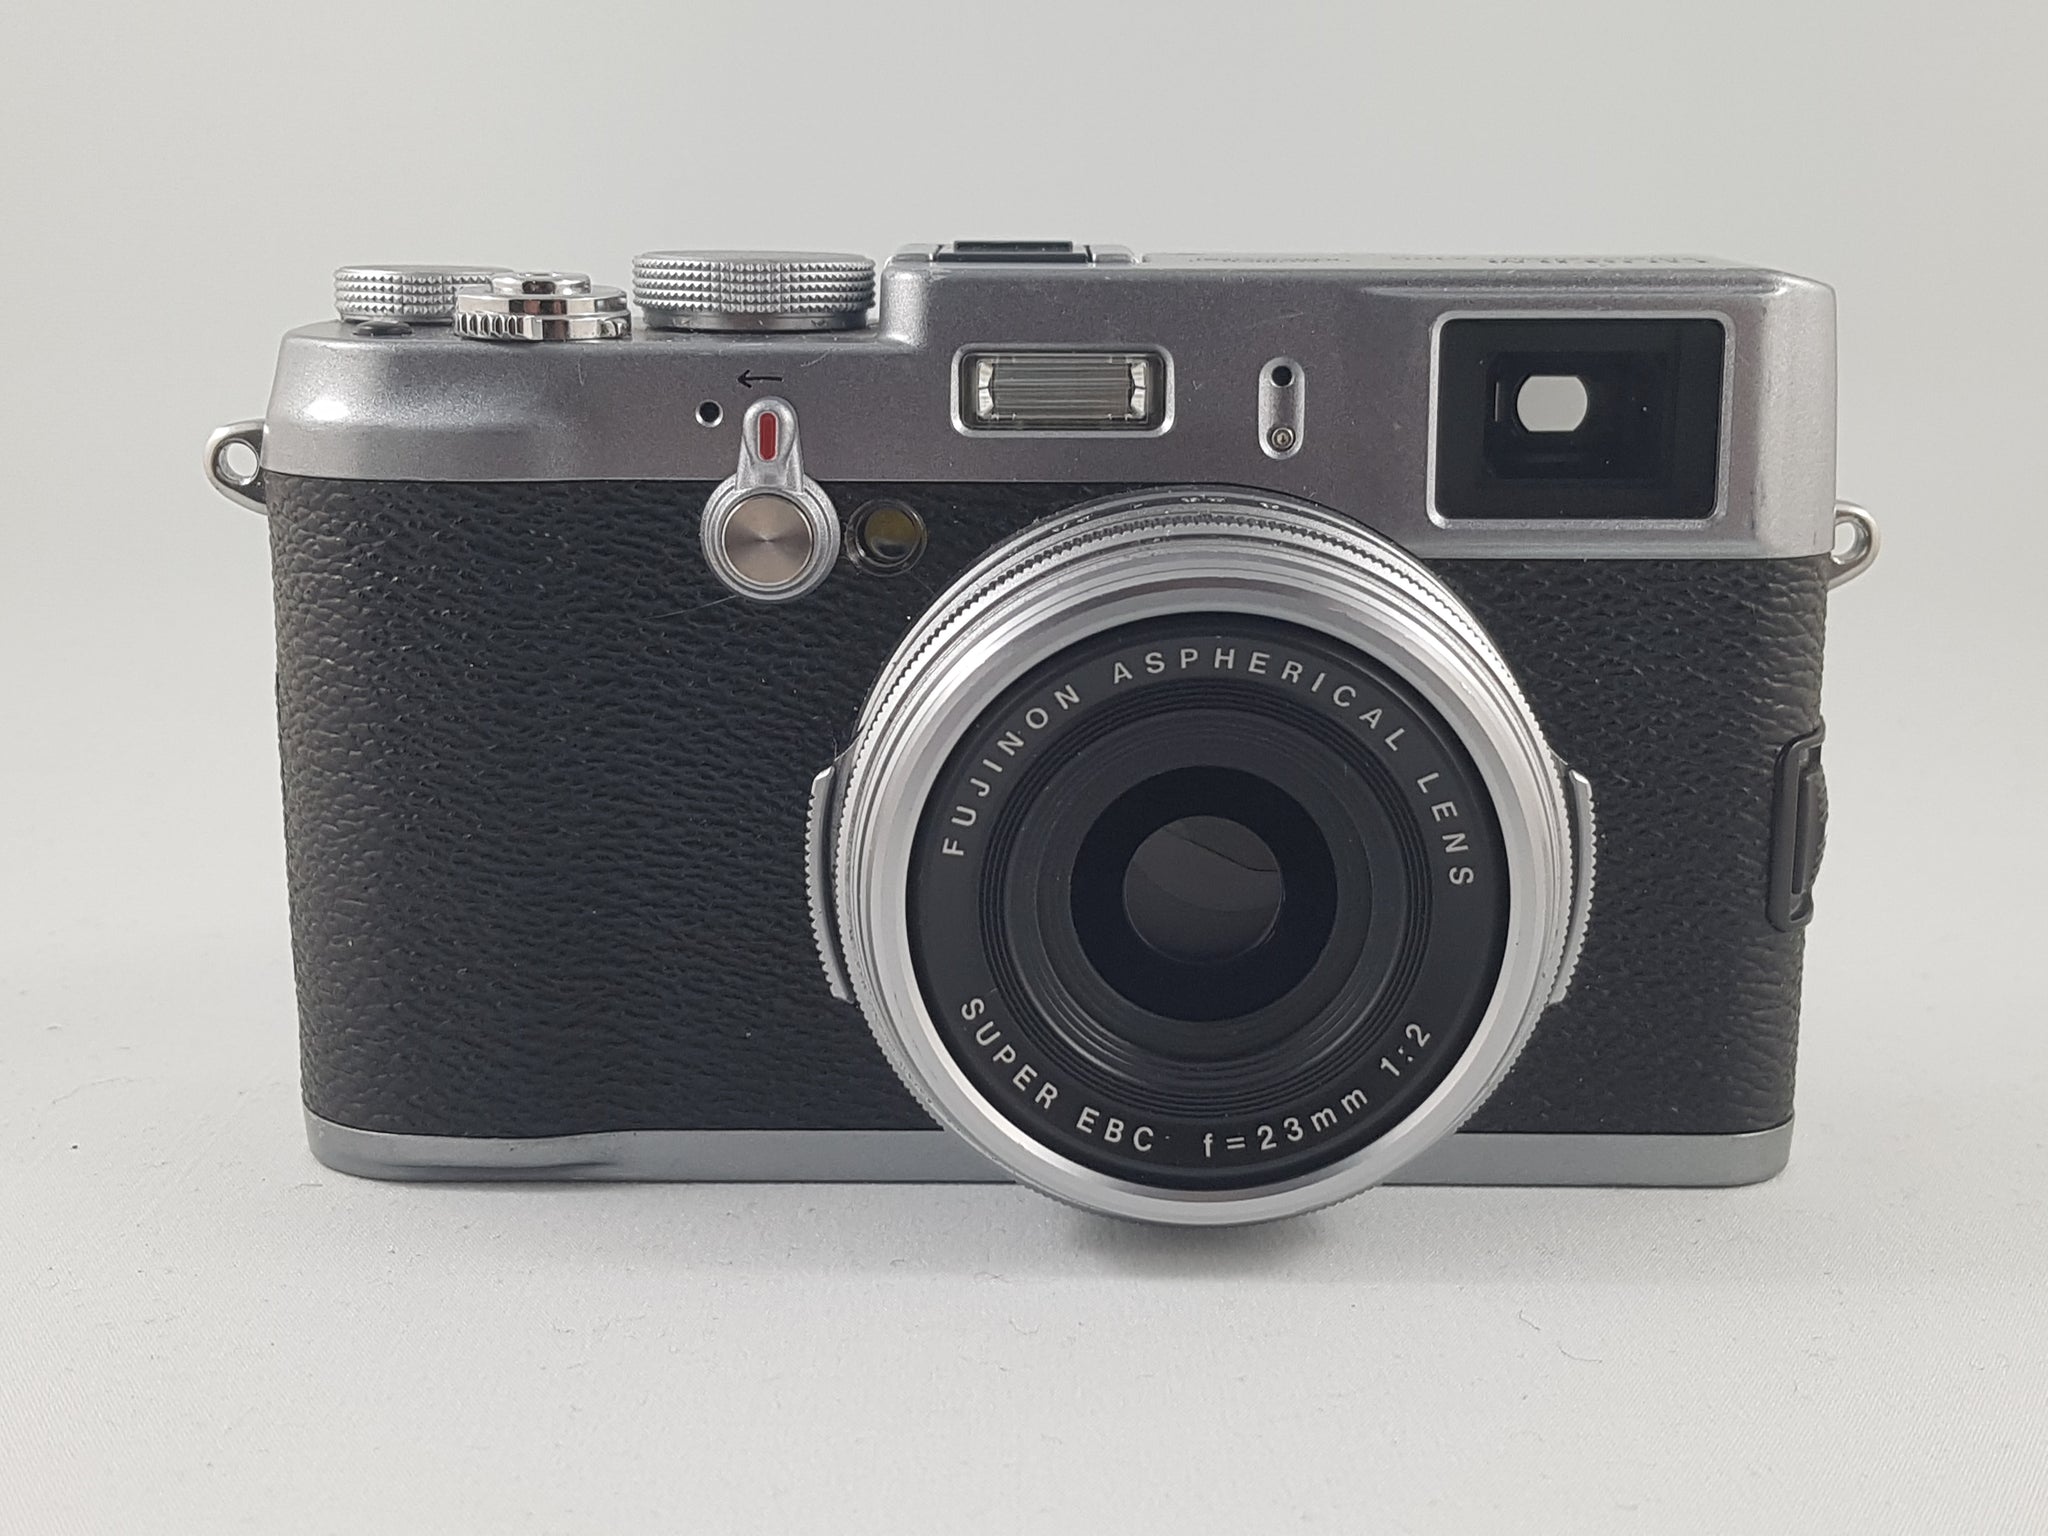 Fujifilm X100 12.3 MP APS-C CMOS EXR Digital Camera with 23mm Fujinon Lens  and 2.8-Inch LCD